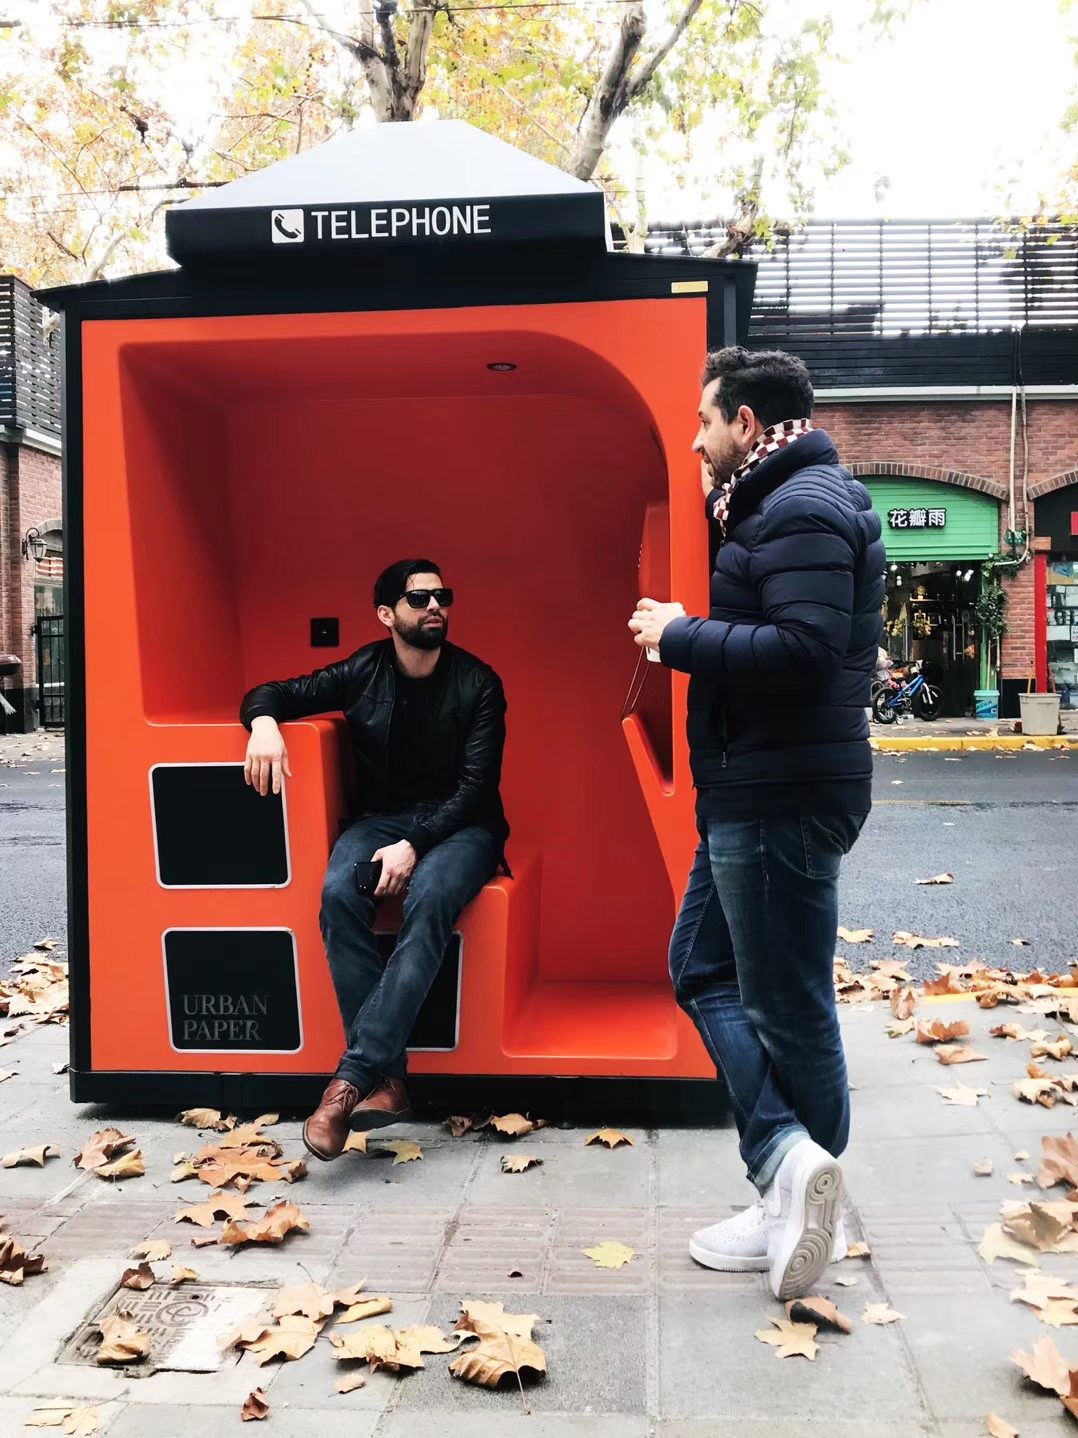 orange phonebooths!!! amazing